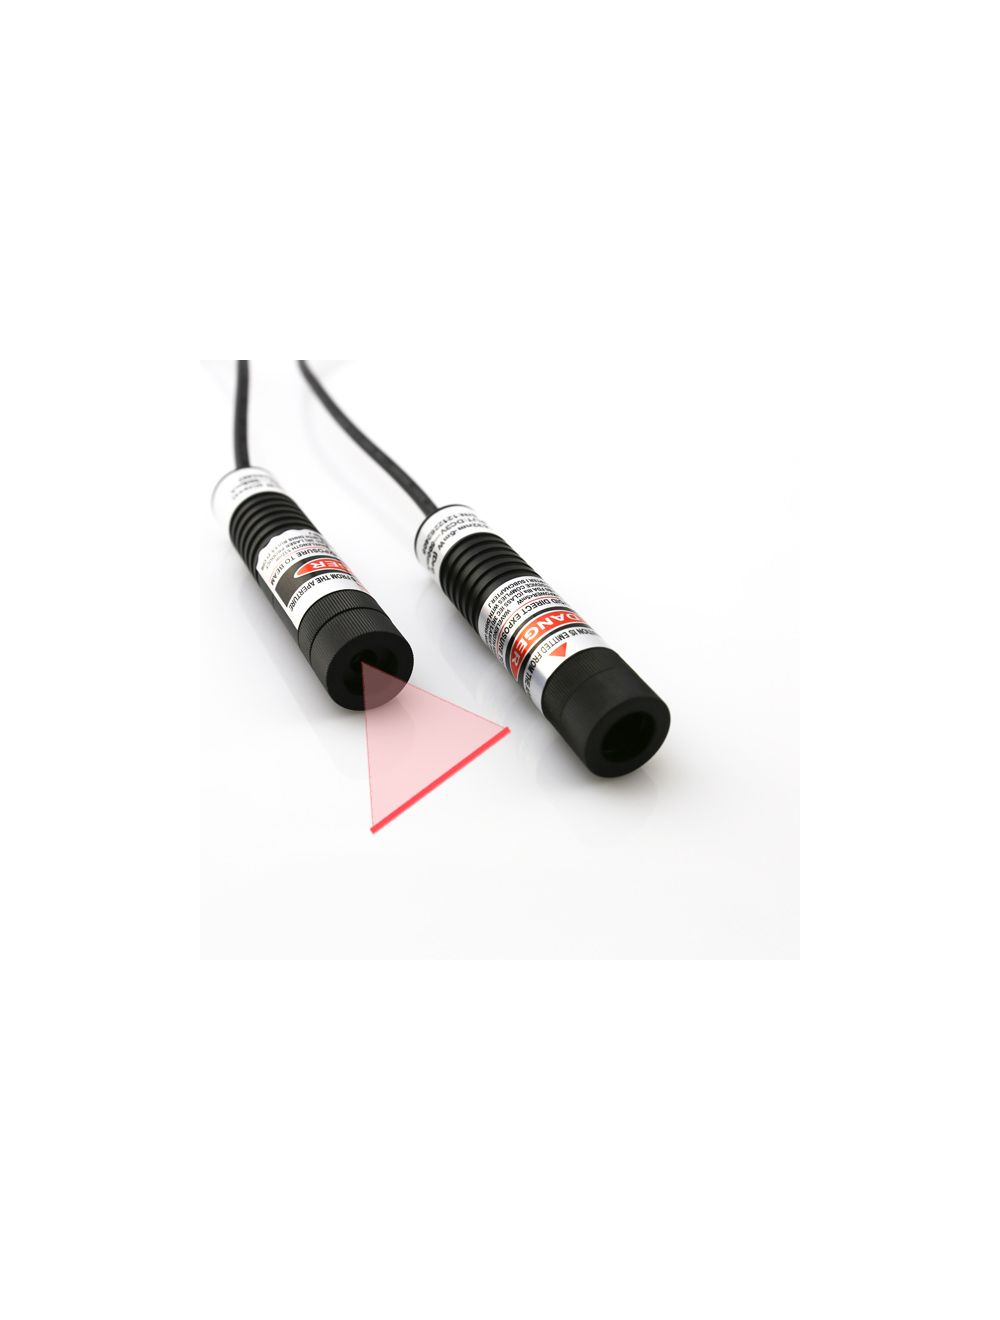 Focusable 635nm Red Line Laser Module, Red Laser Line Generator